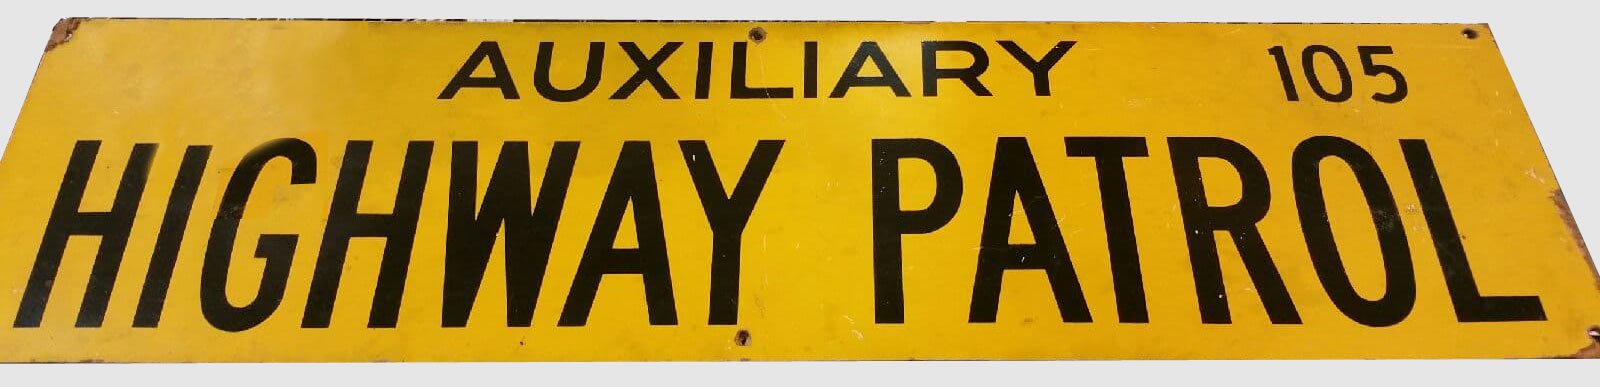 Iowa auxiliary patrol sign plate